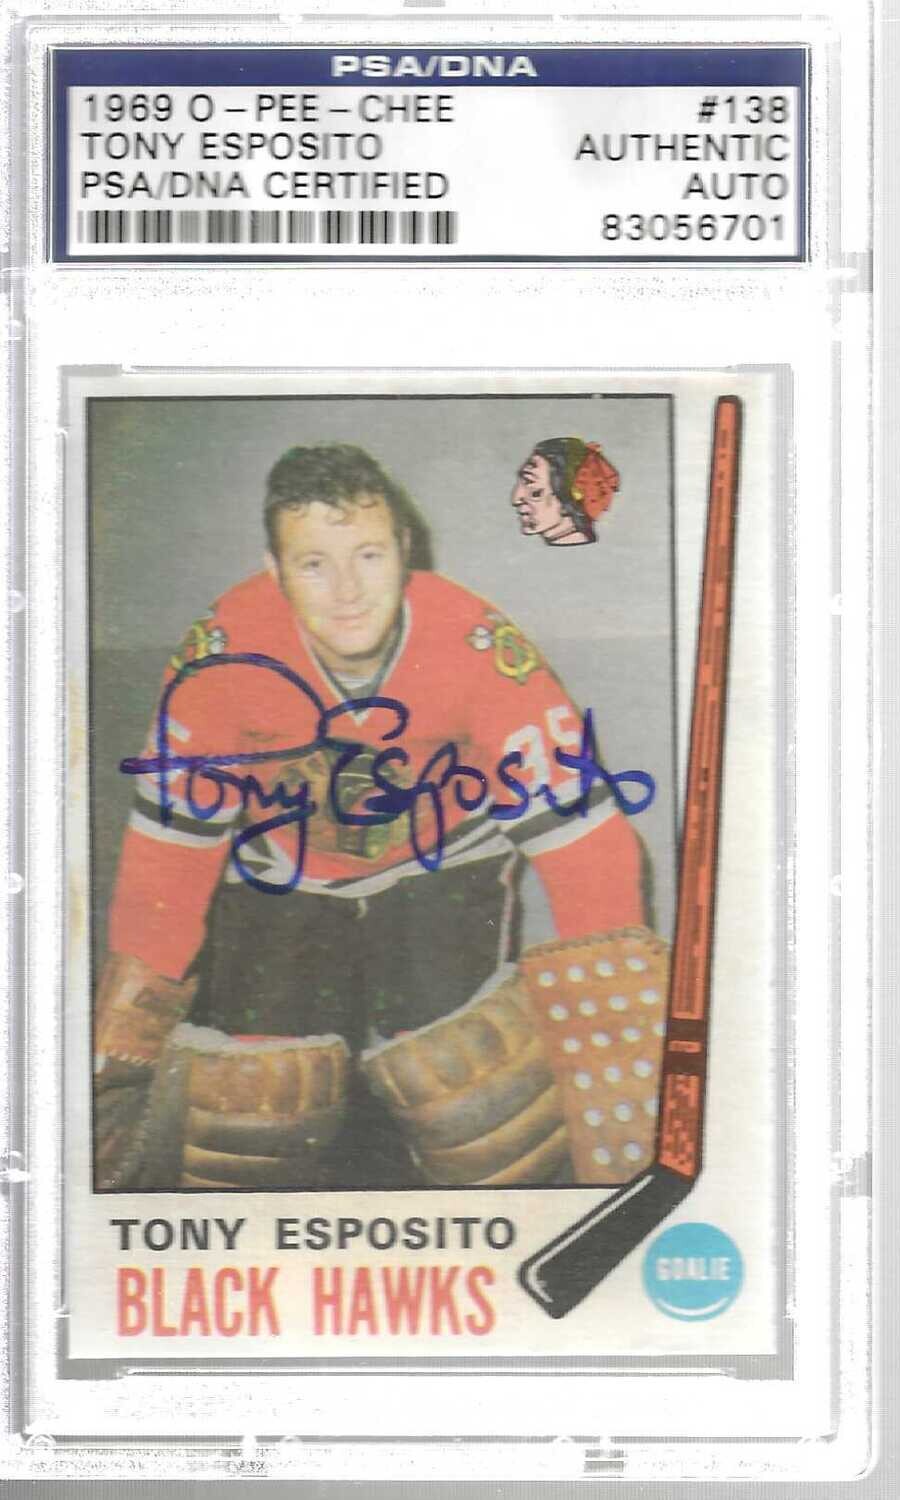 '69/70 Opeechee #138 Tony Esposito Autographed rookie card PSA/DNA